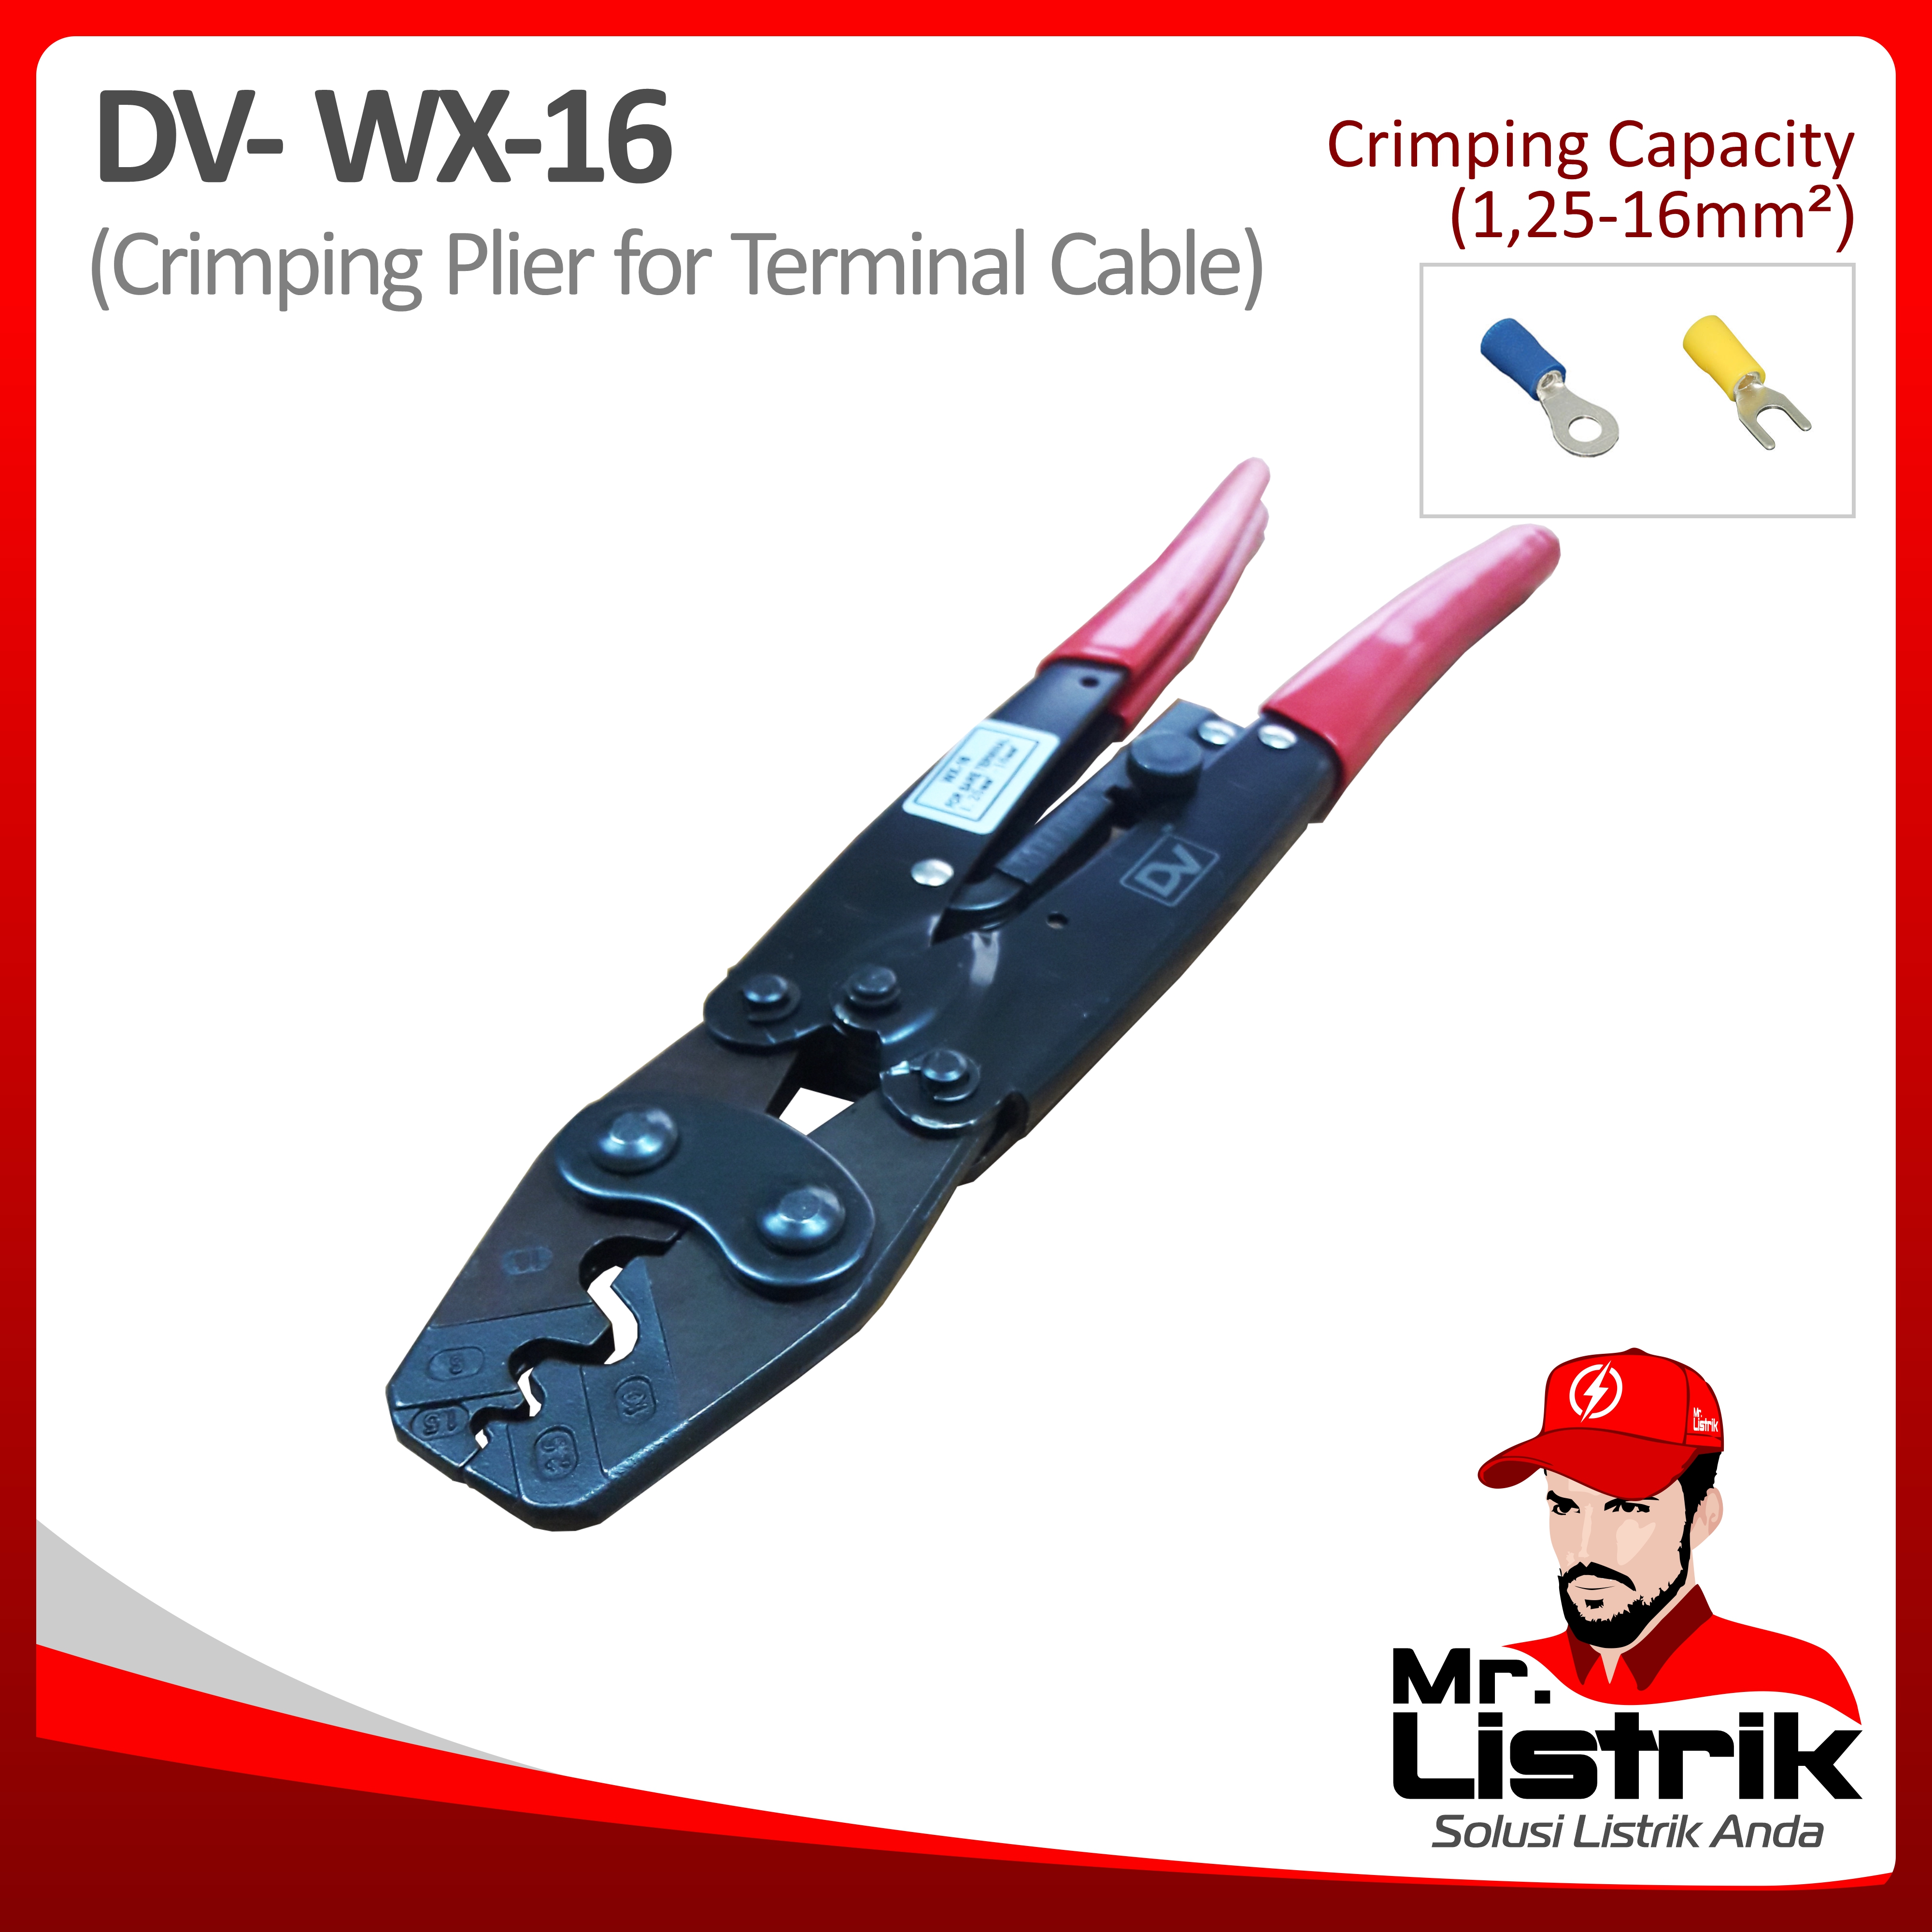 Crimping Tool For Skun 1.25-16mm DV WX-16